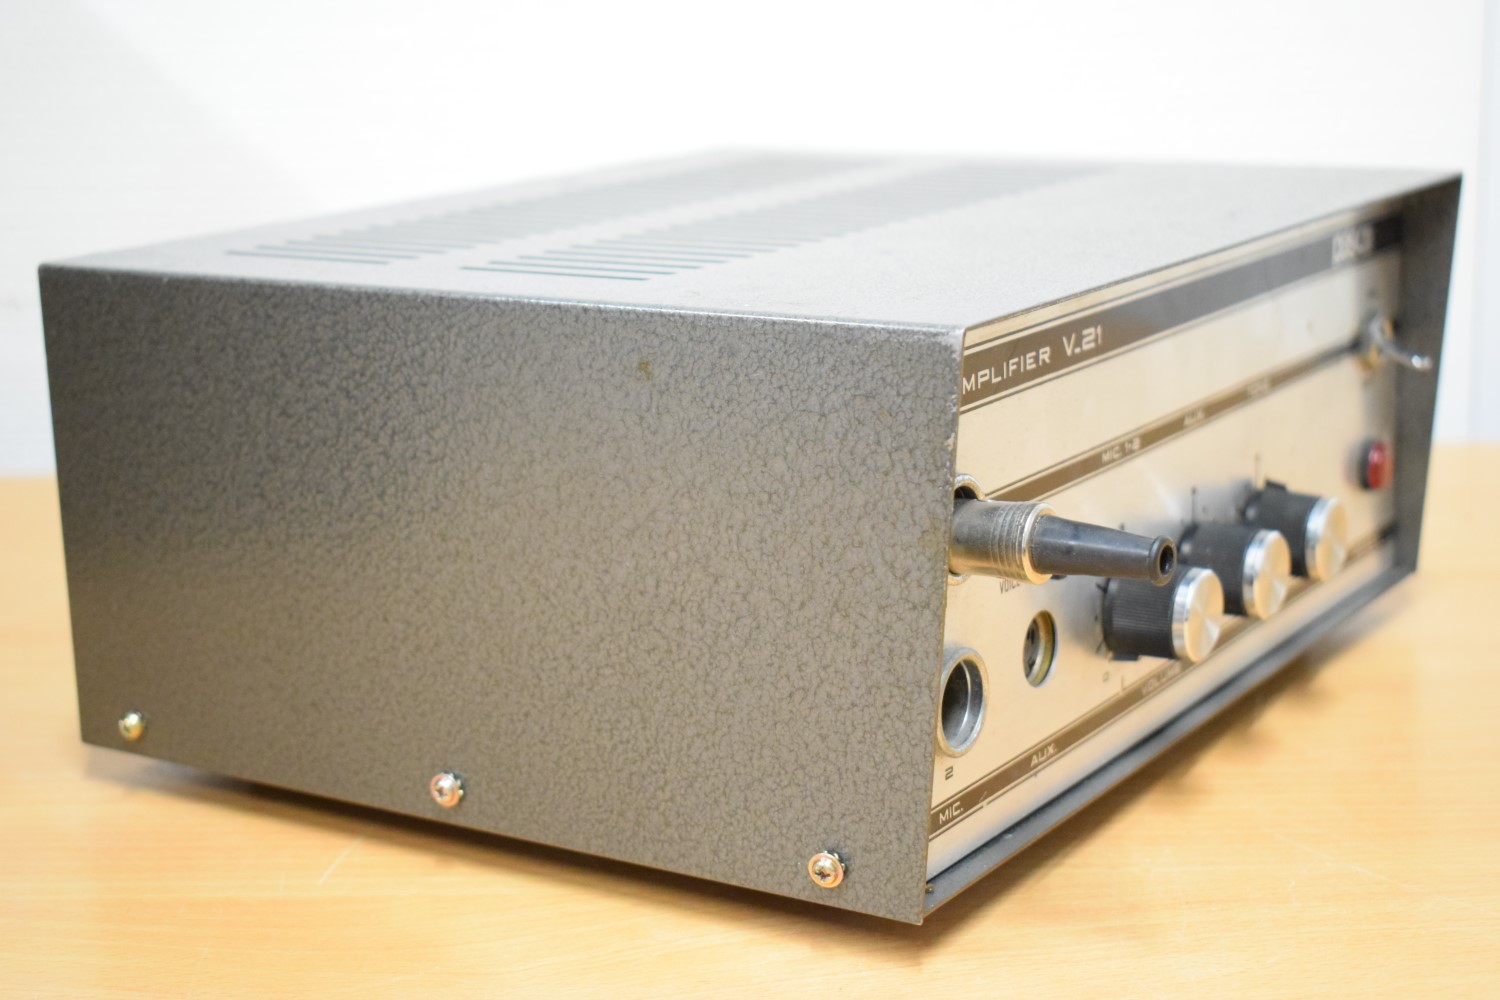 PASO V.21 100 Volts amplifier